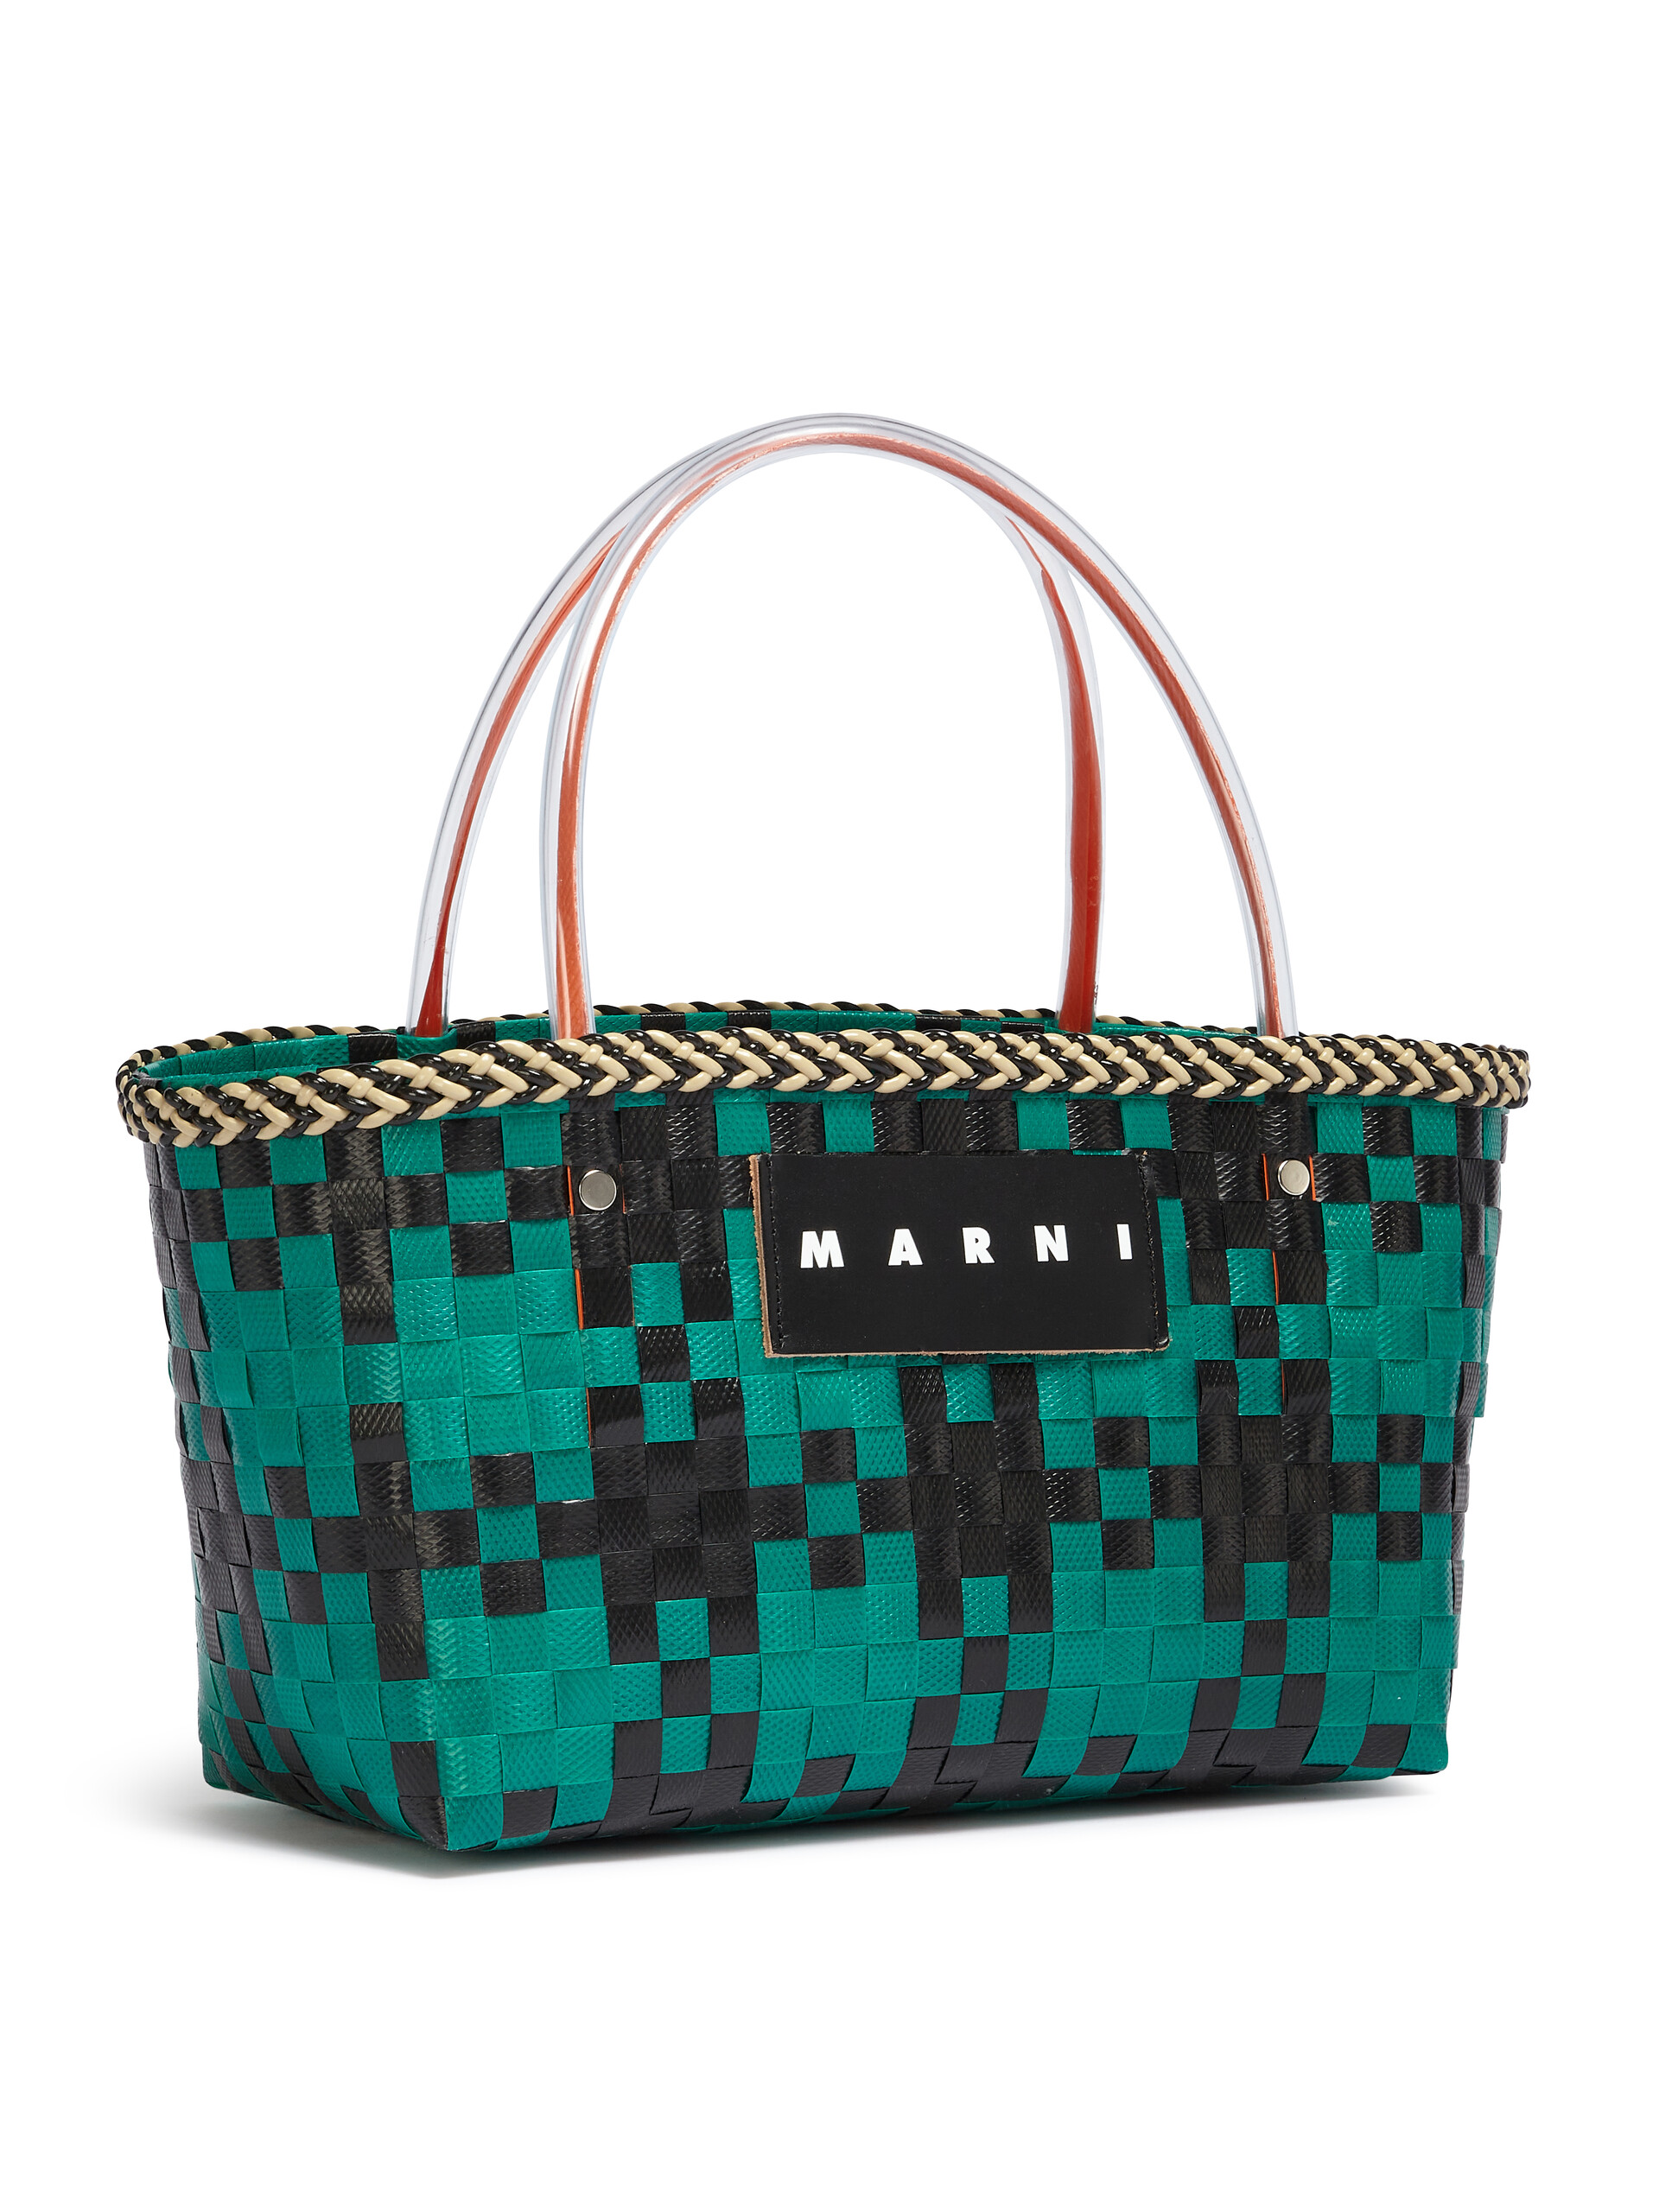 MARNI MARKET CHECK BAG in black and green tartan woven material - Bags - Image 4